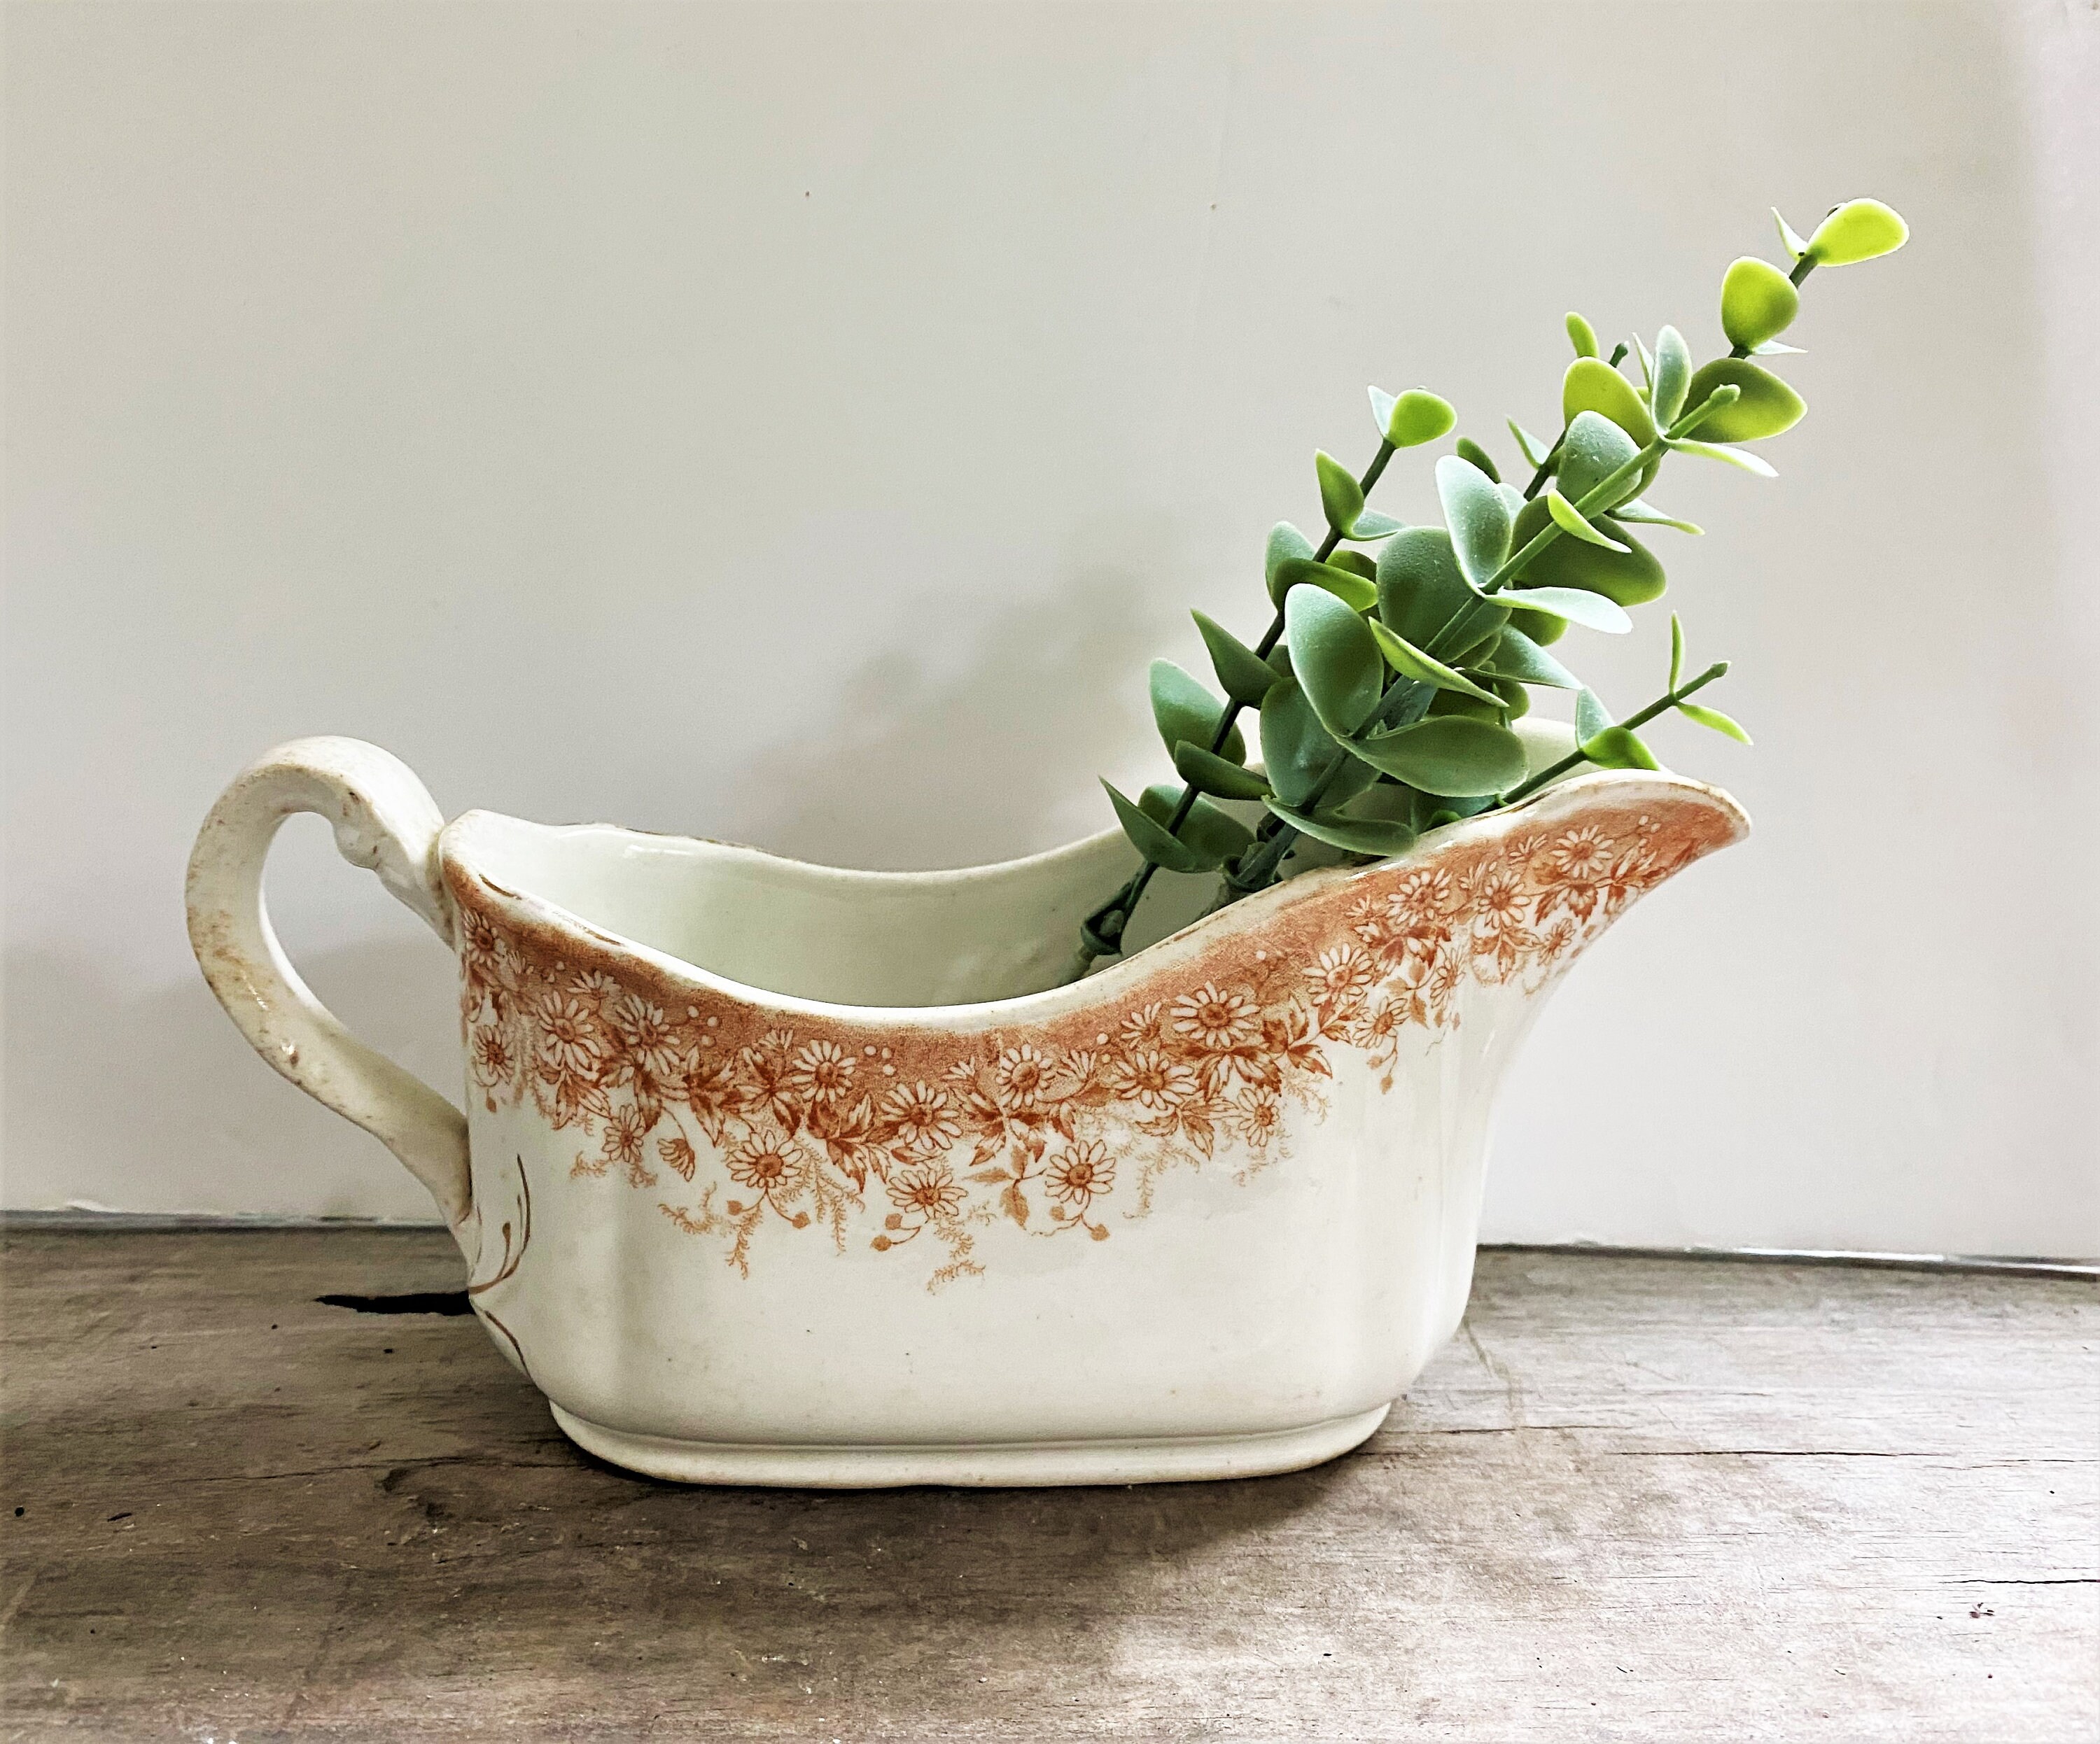 Rustic Leaf Pot - Set of 2 by Campania International, Rustic Brown